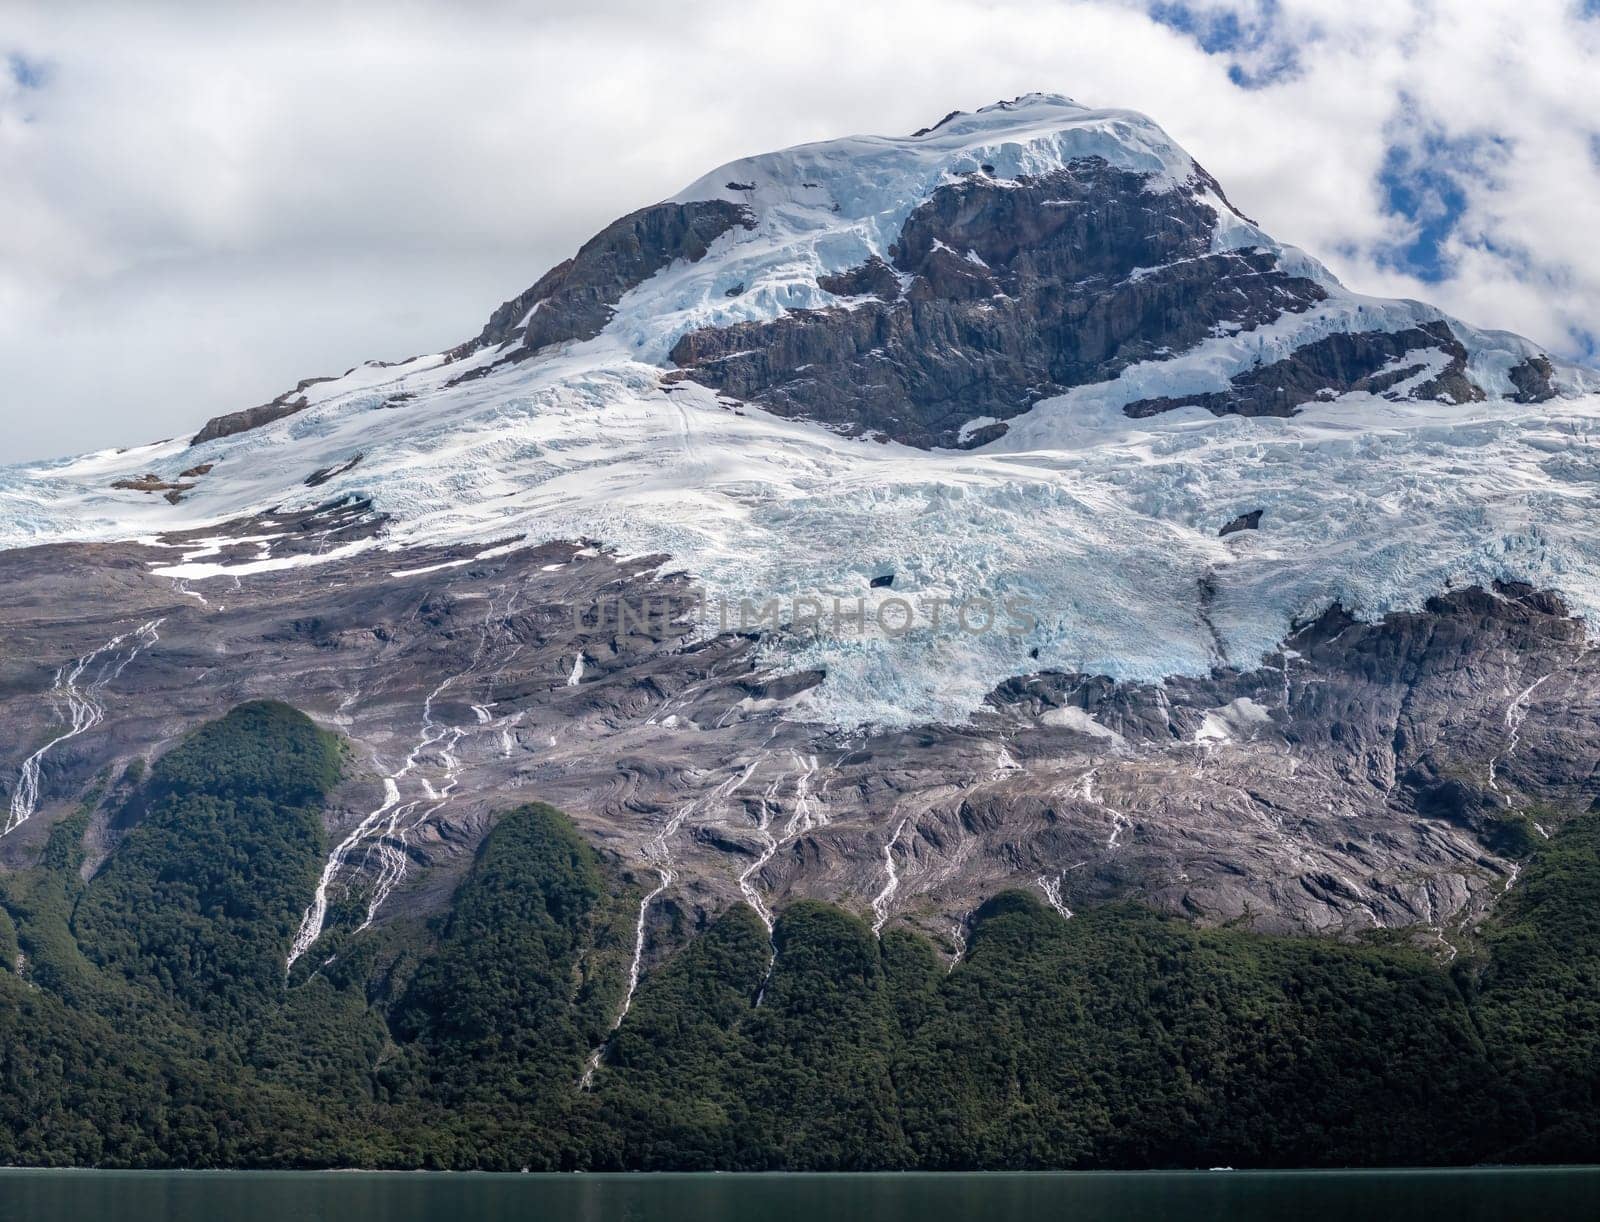 Majestic Glacier Overlooking a Calm Alpine Lake by FerradalFCG